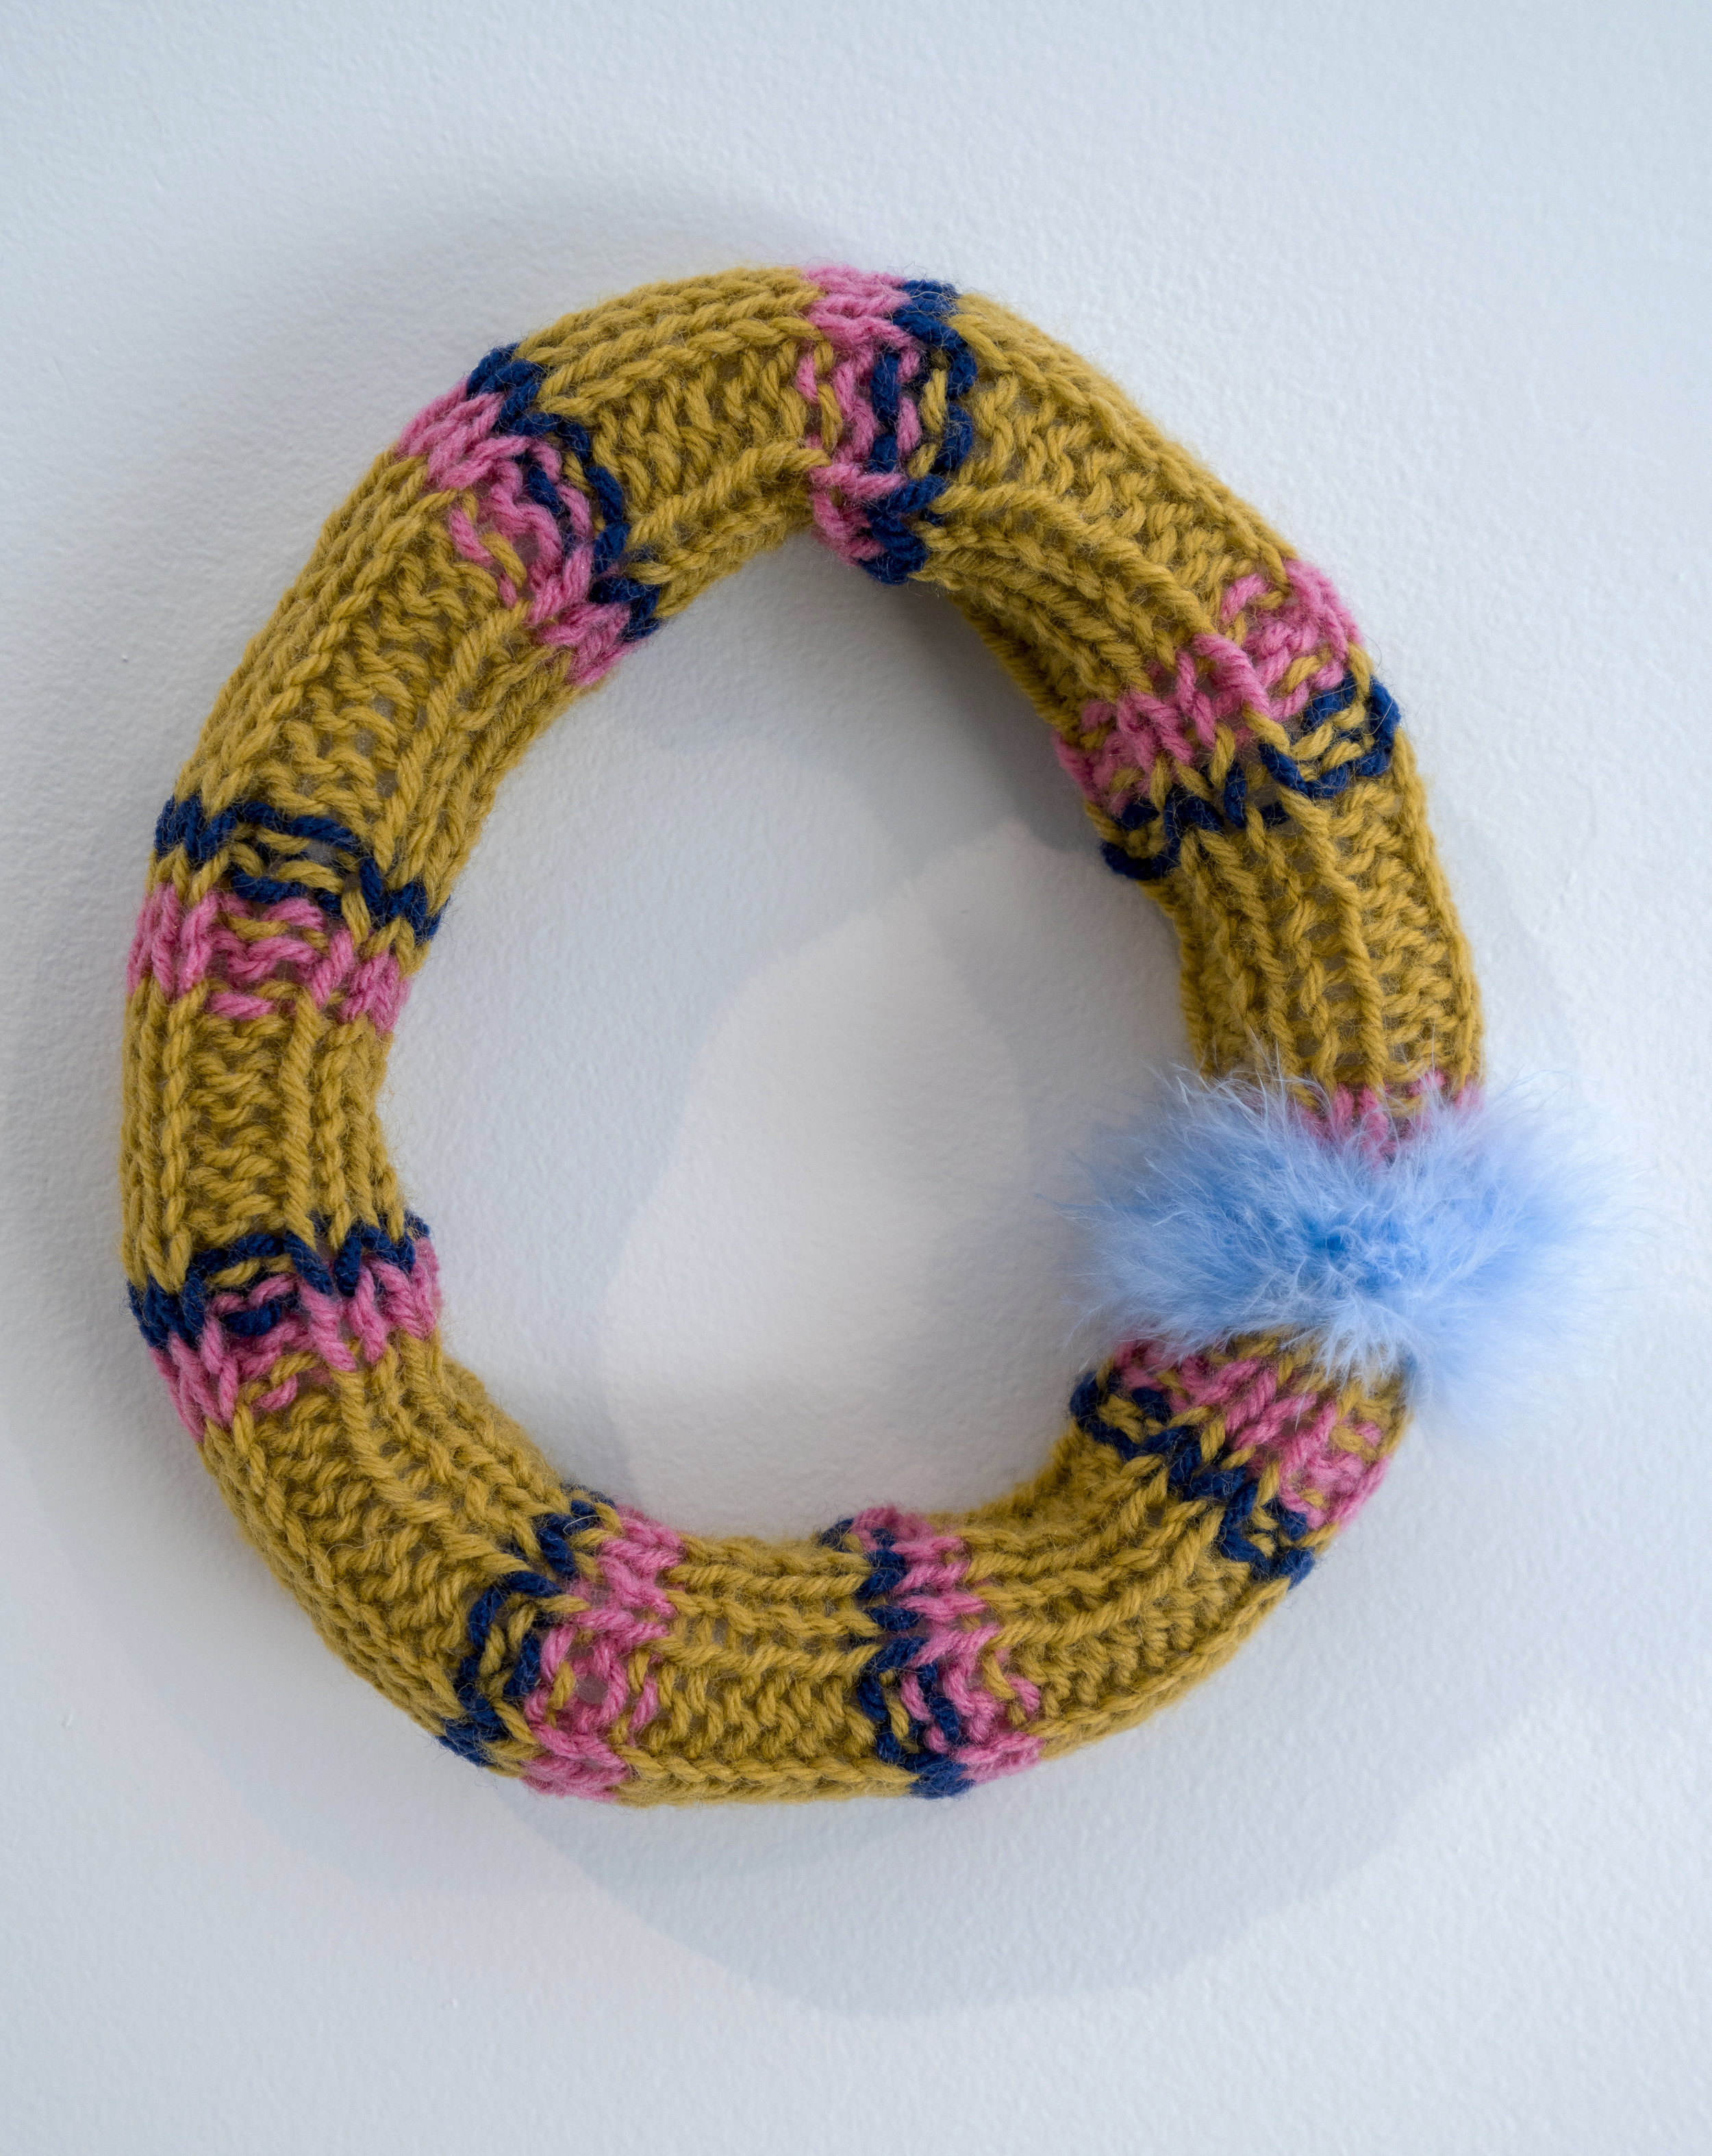   Ring around the rosie   2016  Wool yarn, acrylic yarn, acrylic stuffing,&nbsp;feather down.  8" x 8"       